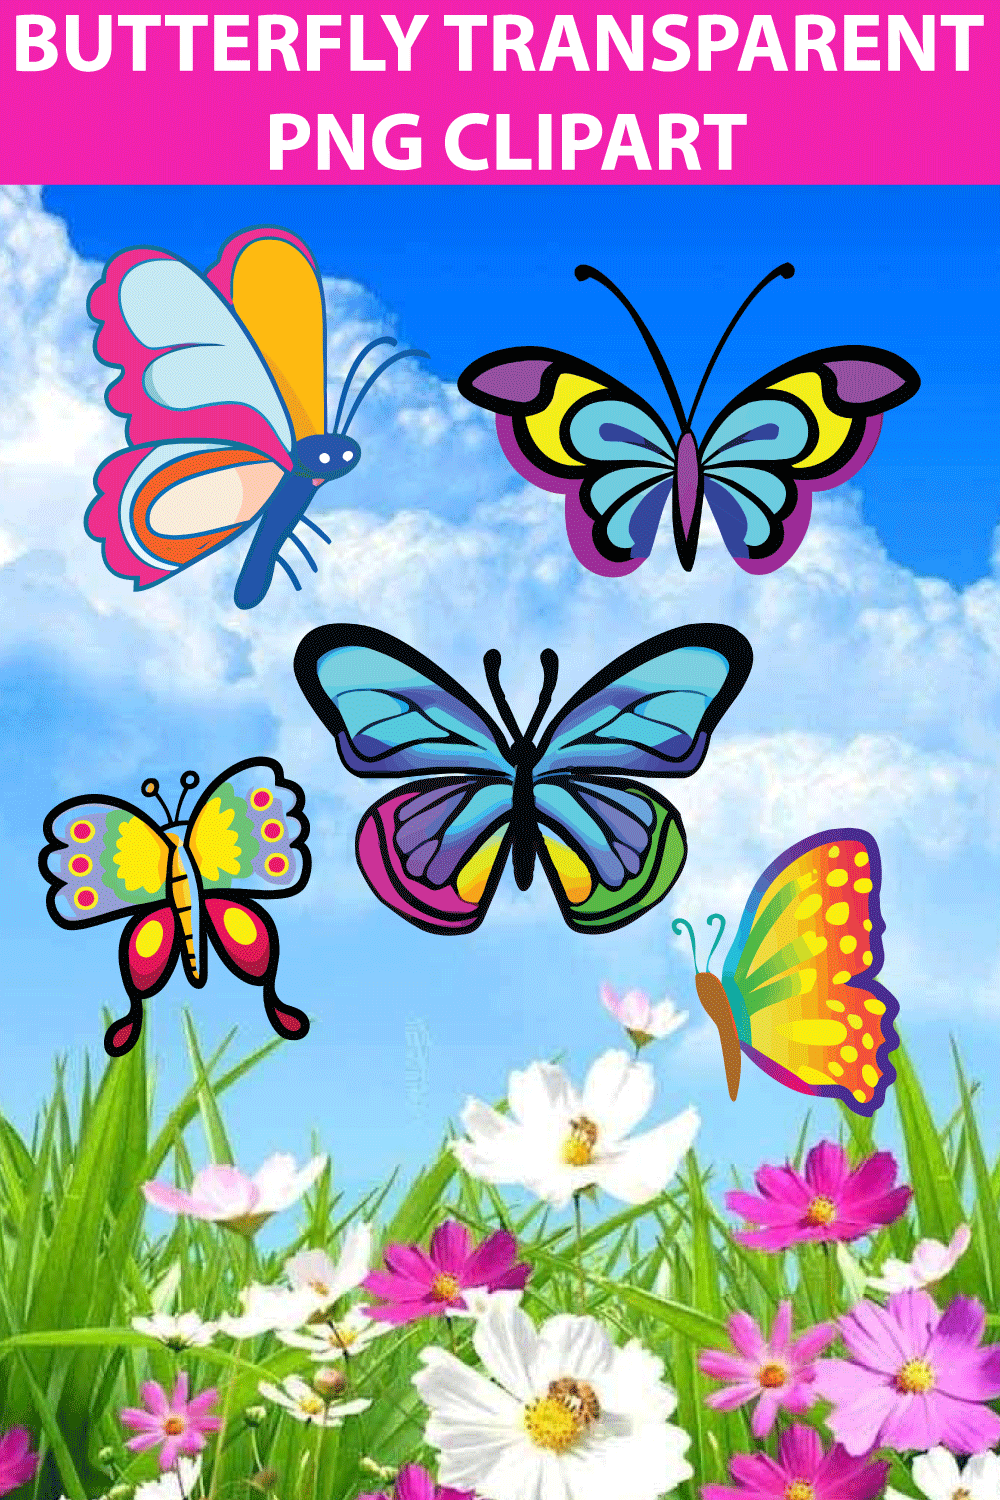 Butterfly PNG Clipart Bundle pinterest image.